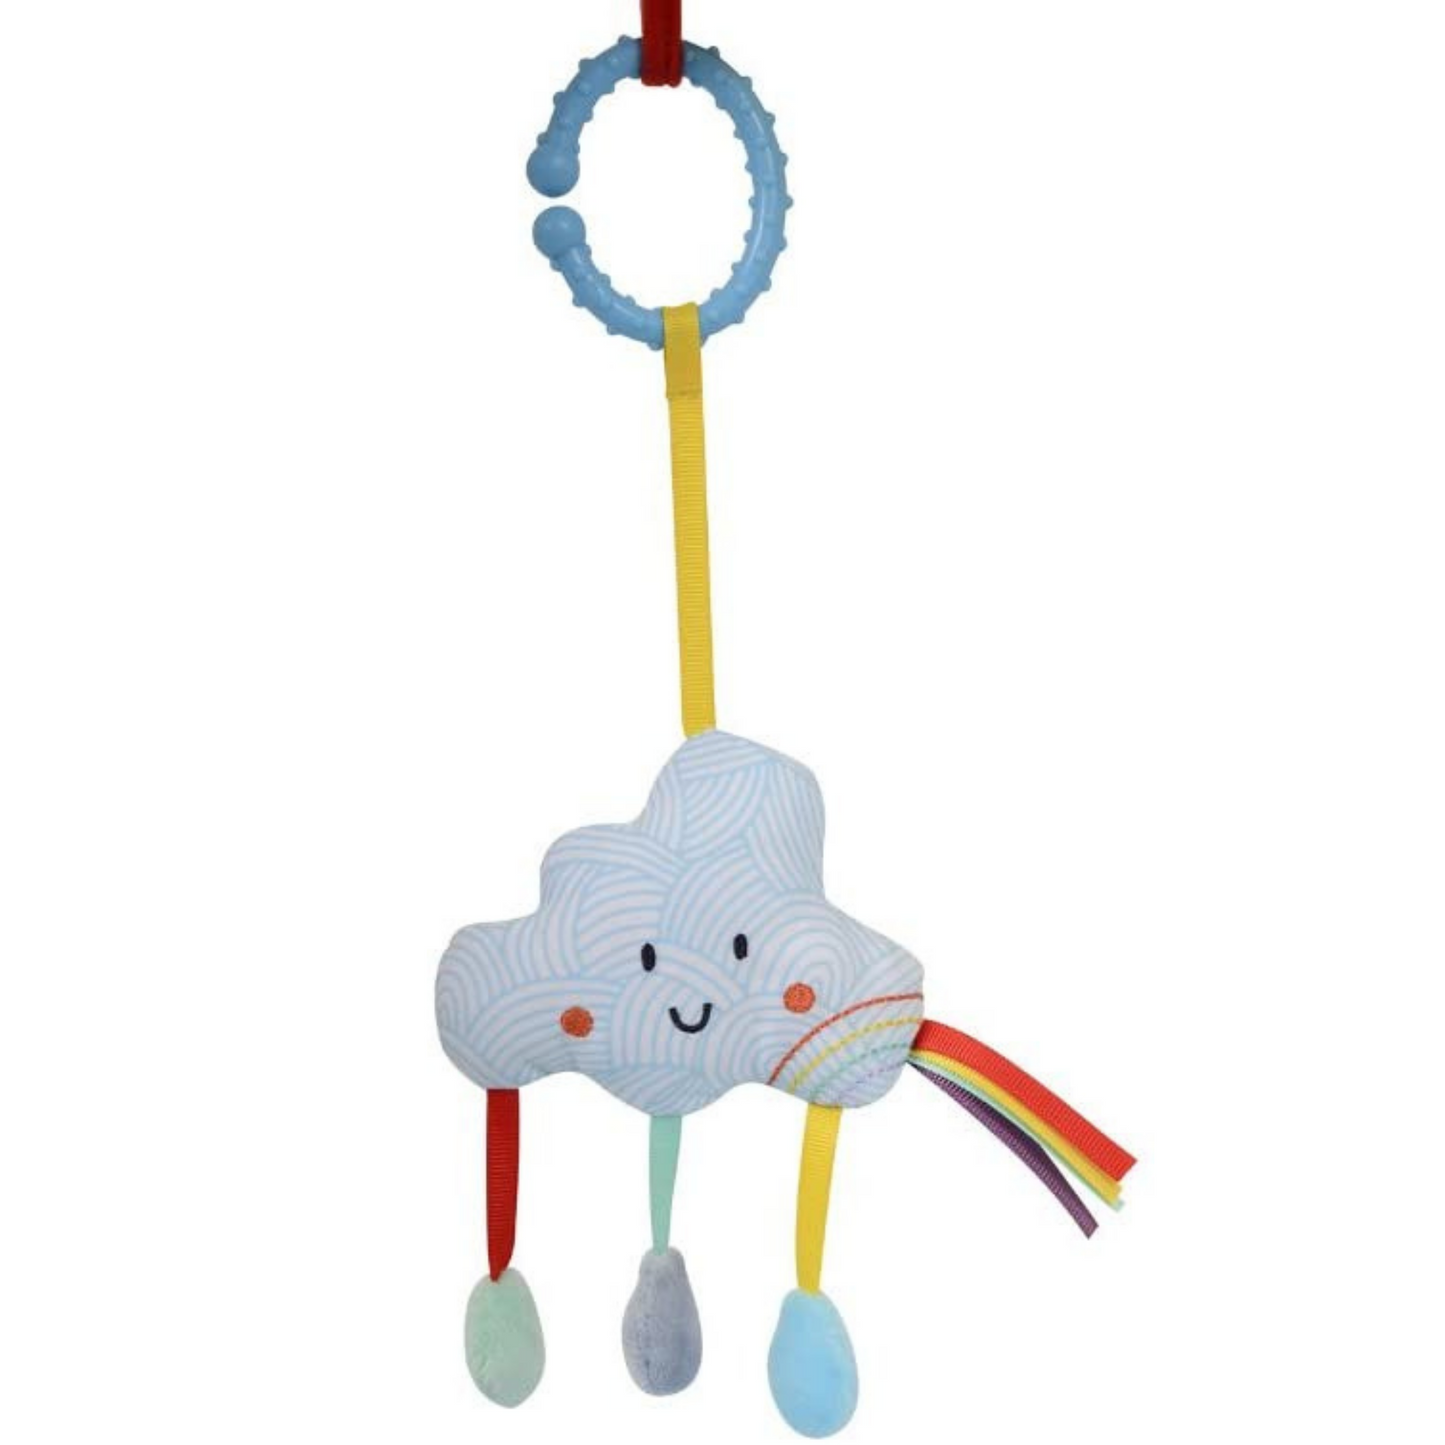 East Coast Nursey "Say Hello" Cloud Stroller Toy